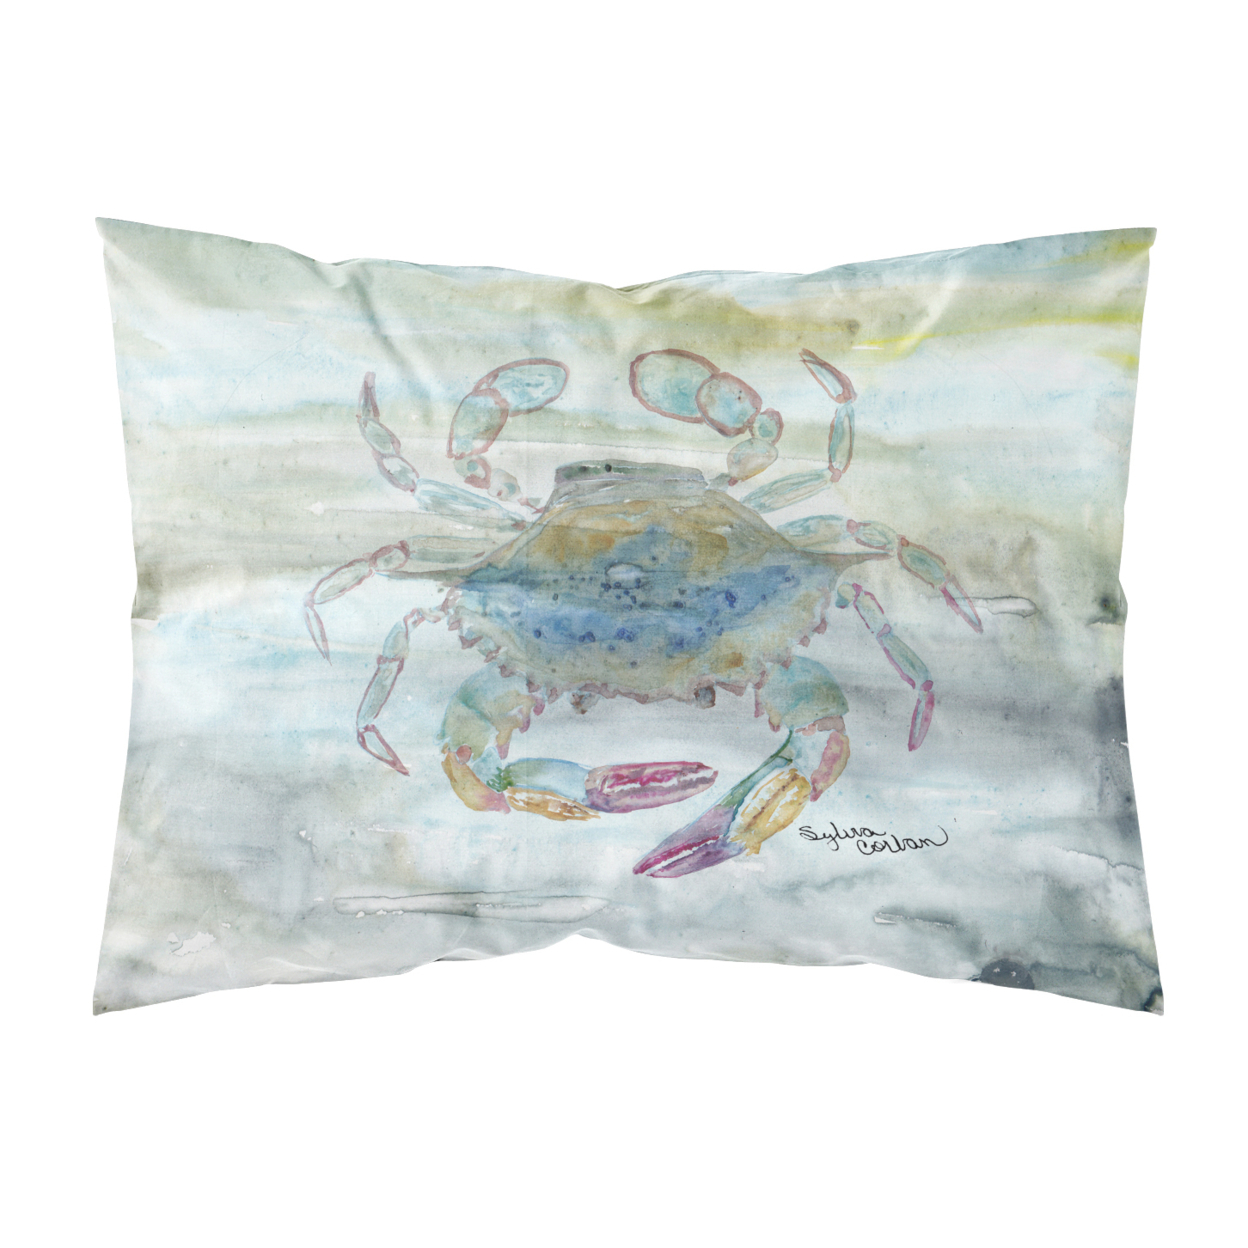 Multicolor Carolines Treasures 8915PILLOWCASE Wine Crab Shrimp and Oysters Moisture Wicking Fabric Standard Pillowcase Standard